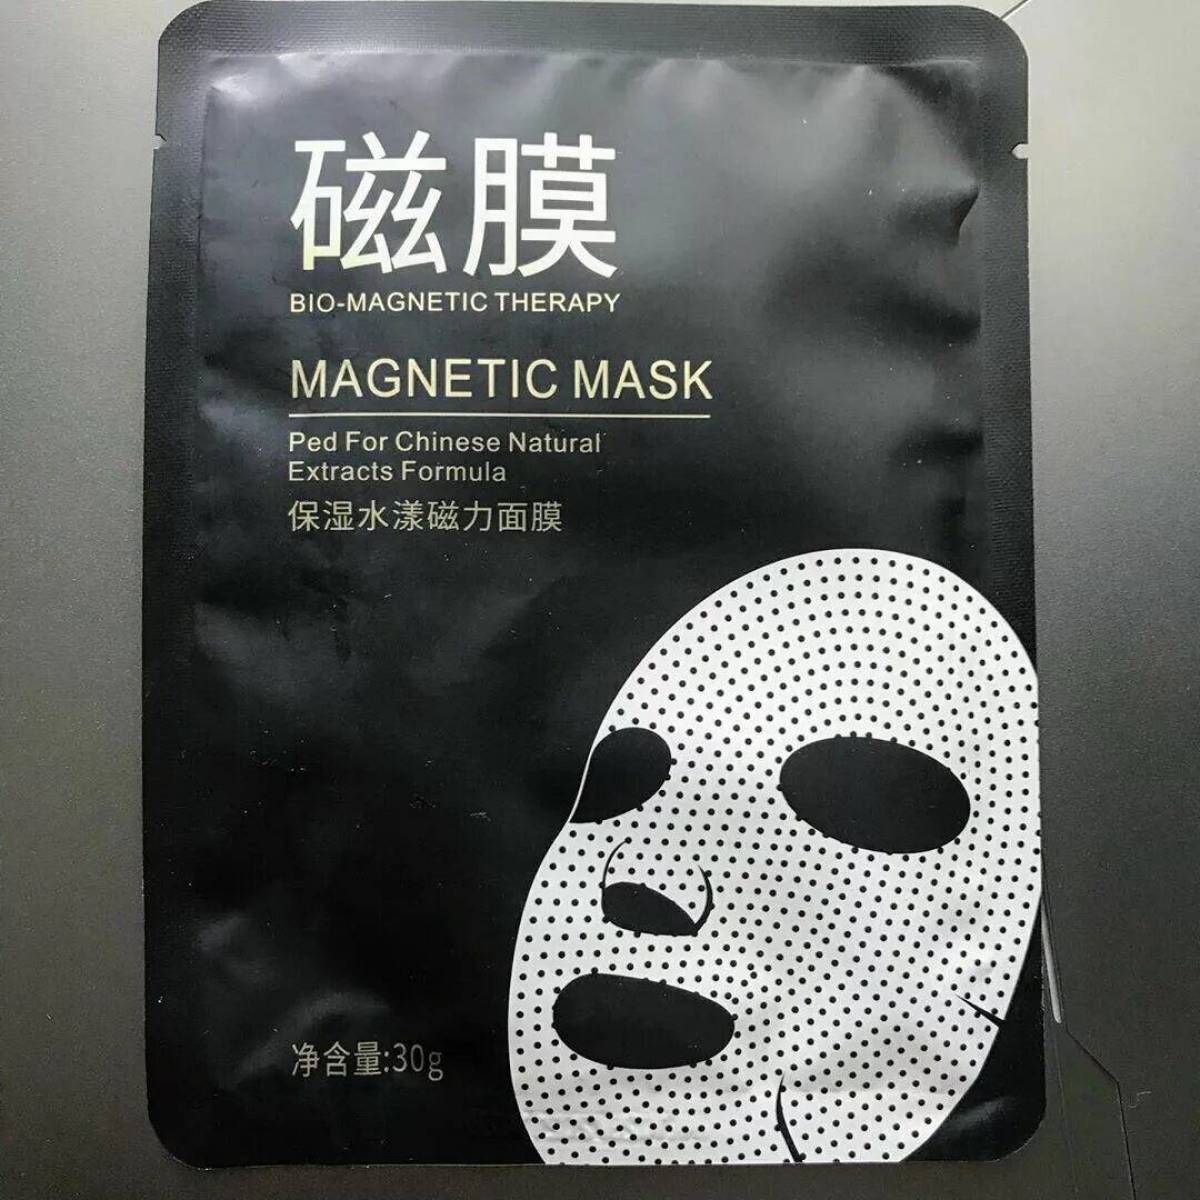 Маски для лица описание. Акупунктурная магнитная маска для лица "Bio-Magnetic Therapy". Маска для лица. Тканевые маски для лица. Маски для лица тканевые от.